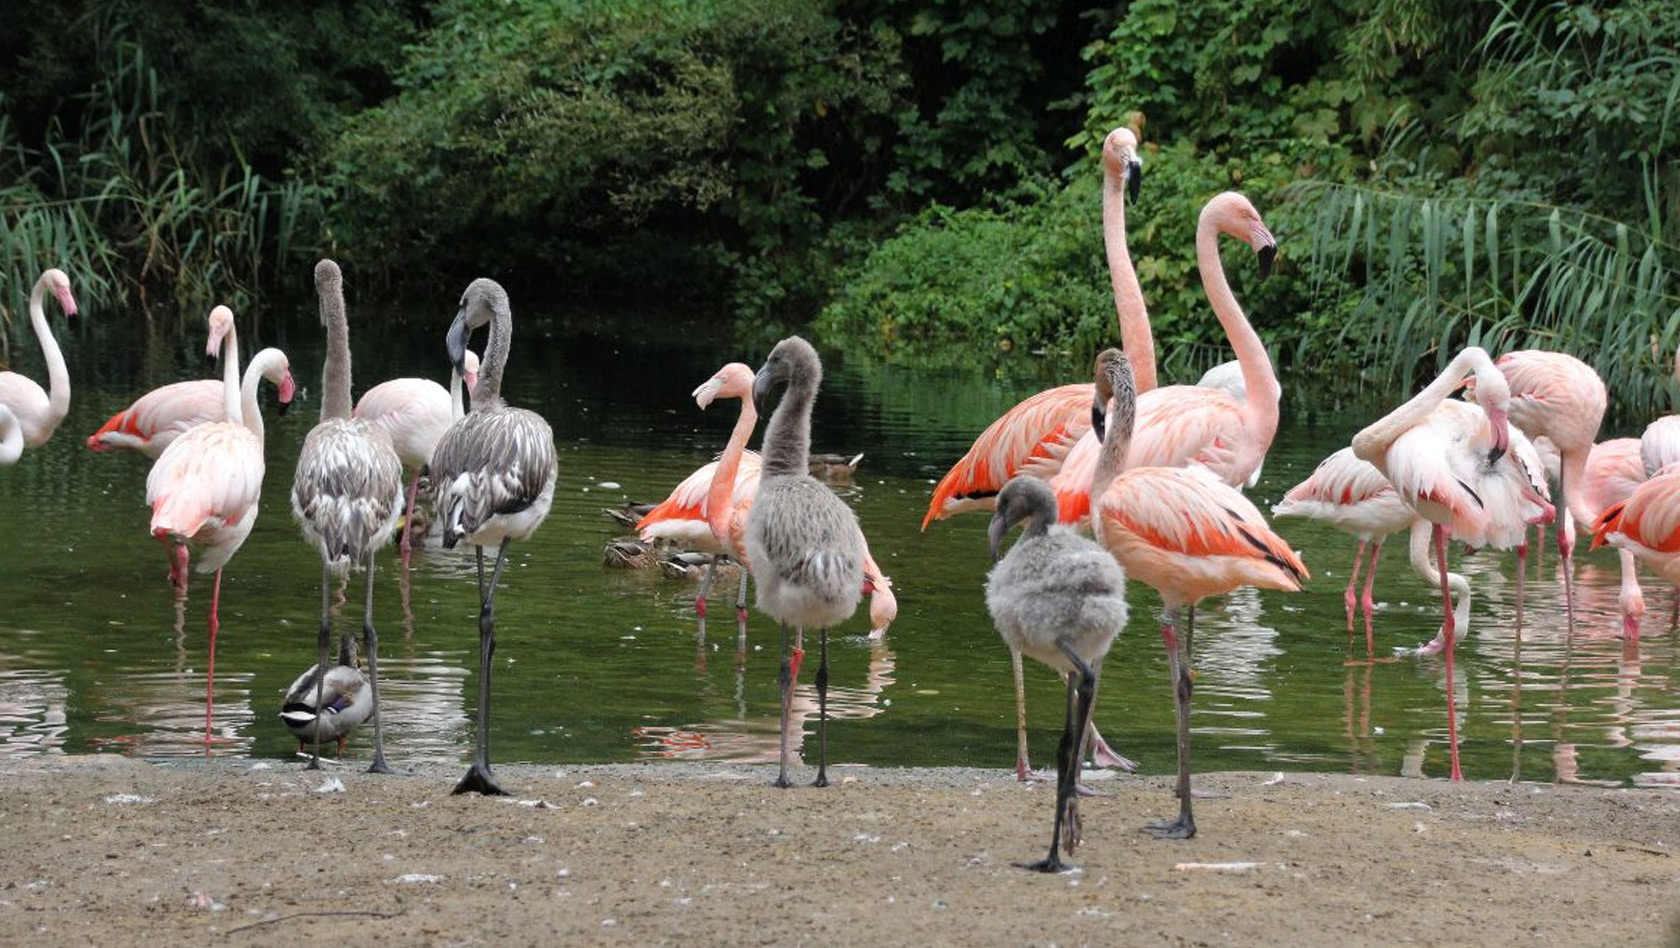 Erlebnis-Zoo Hannover Flamingos 2018